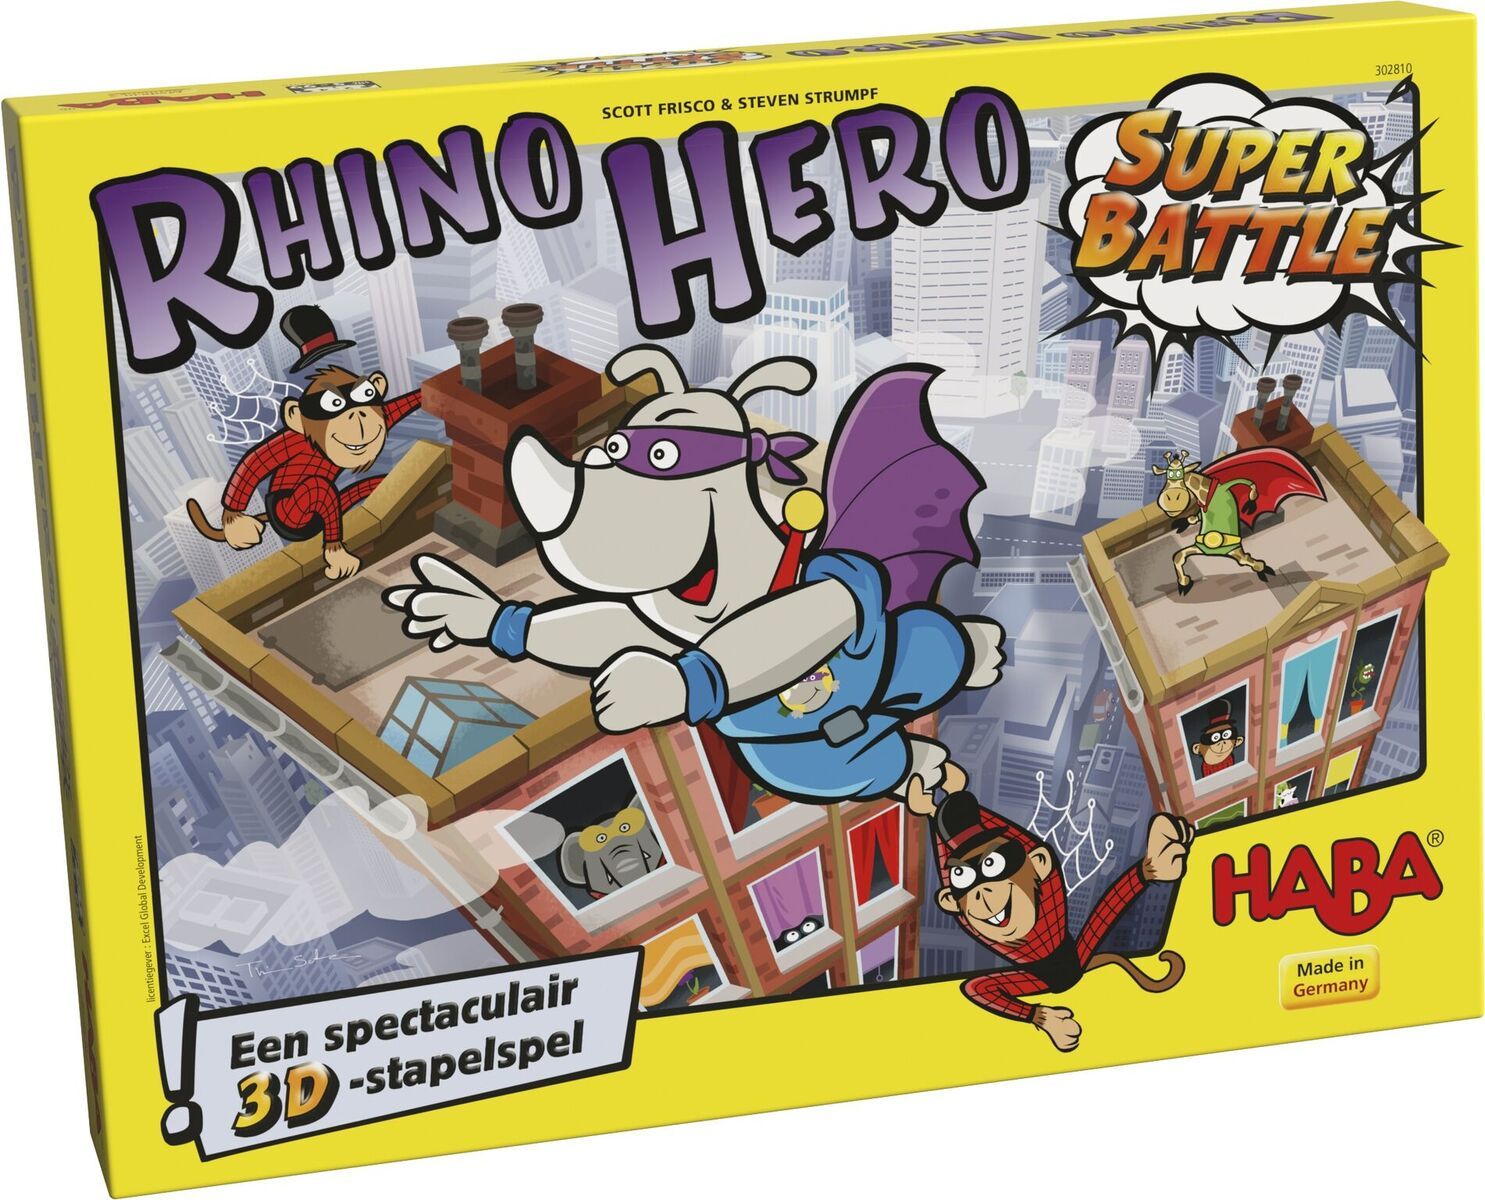 jogos de tabuleiro Rhino Hero Super Battle